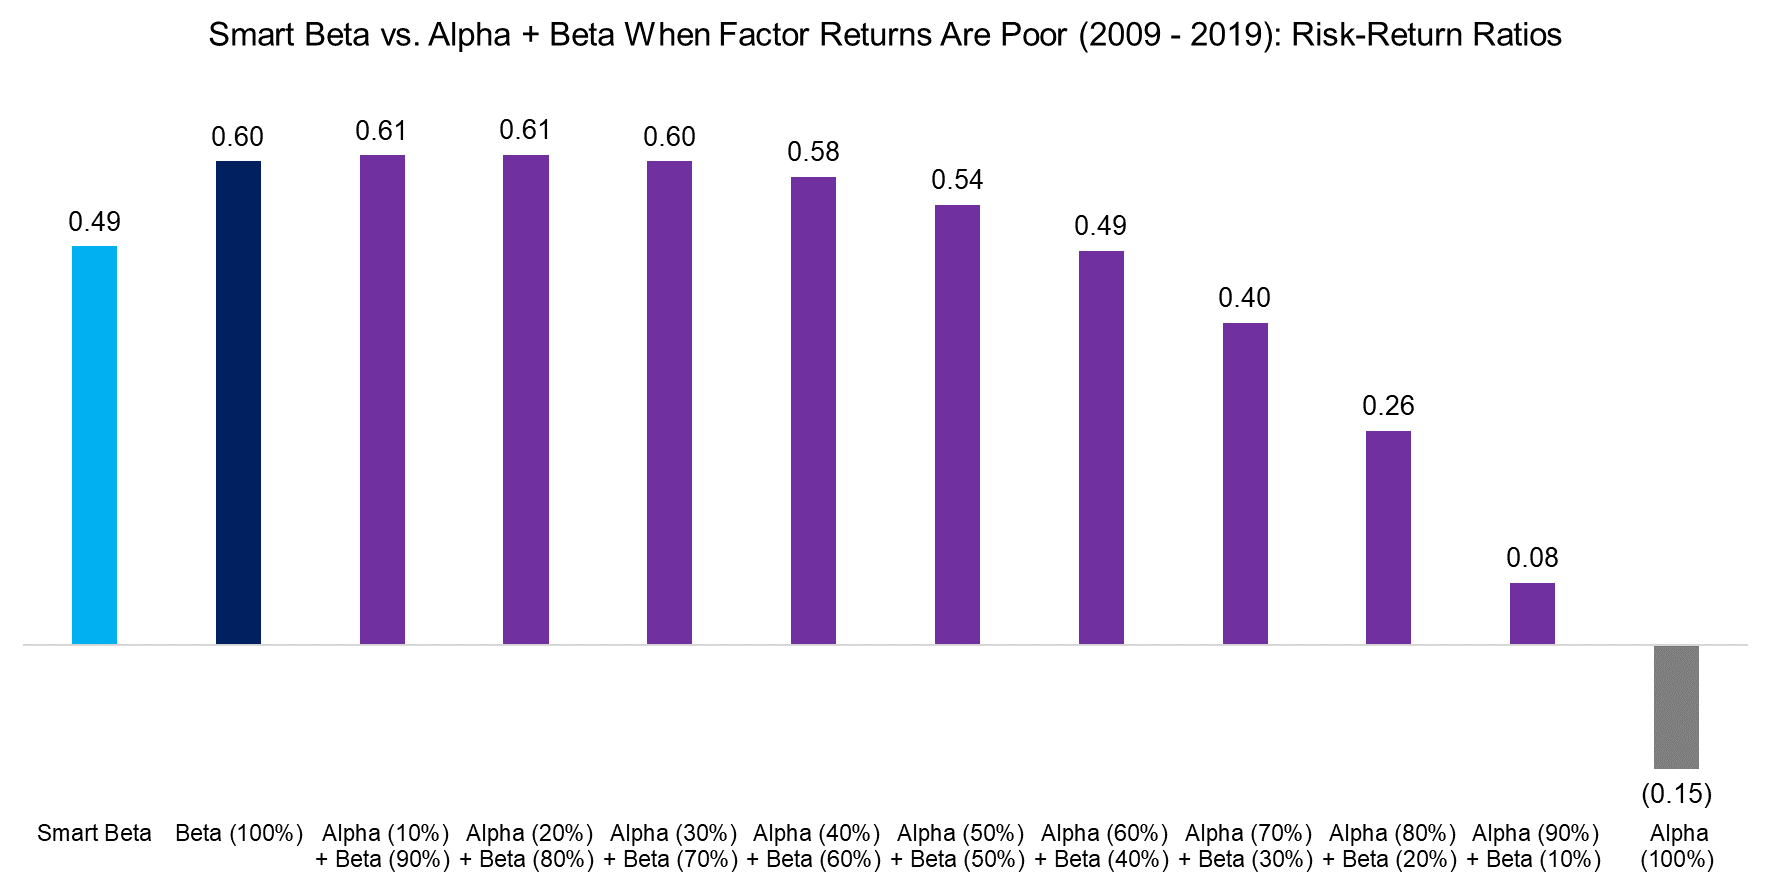 Smart Beta vs. Alpha + Beta When Factor Returns Are Poor (2009 - 2019) Risk-Return Ratios